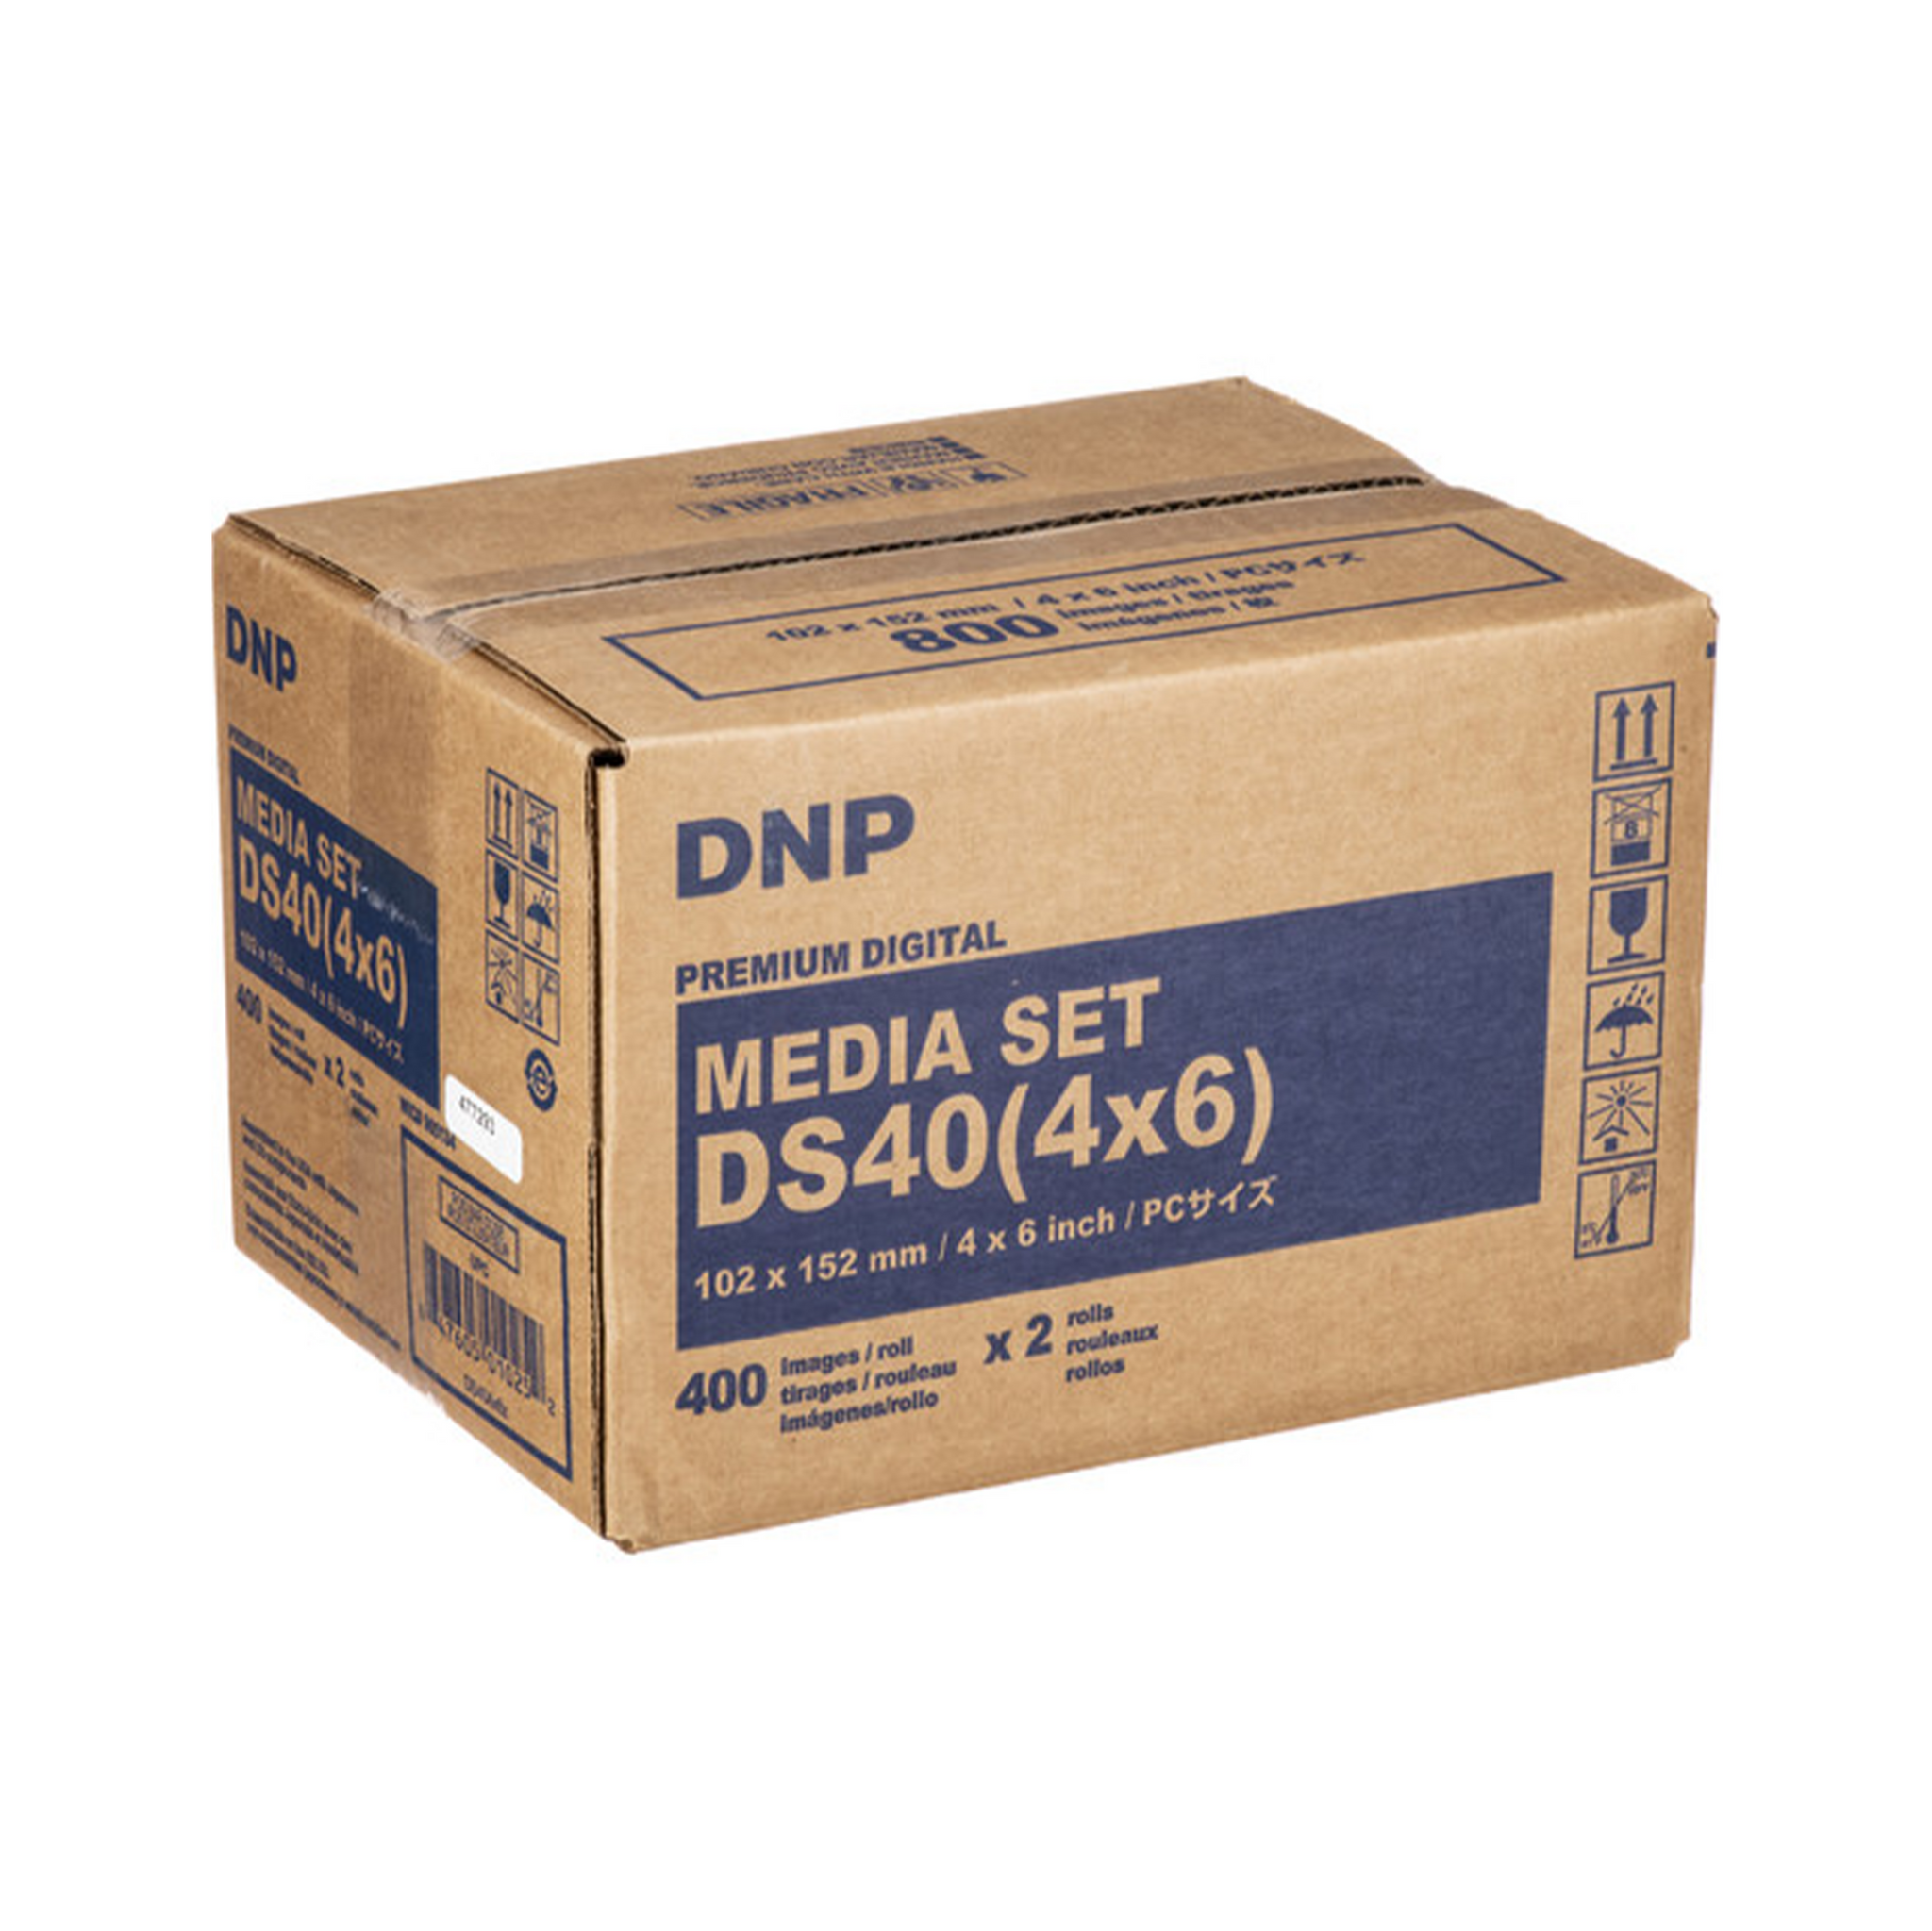 DNP DS40 (4x6) Premium Digital Media Set For DS40 Printer (400prints x 2 roll)-Printers-futuromic